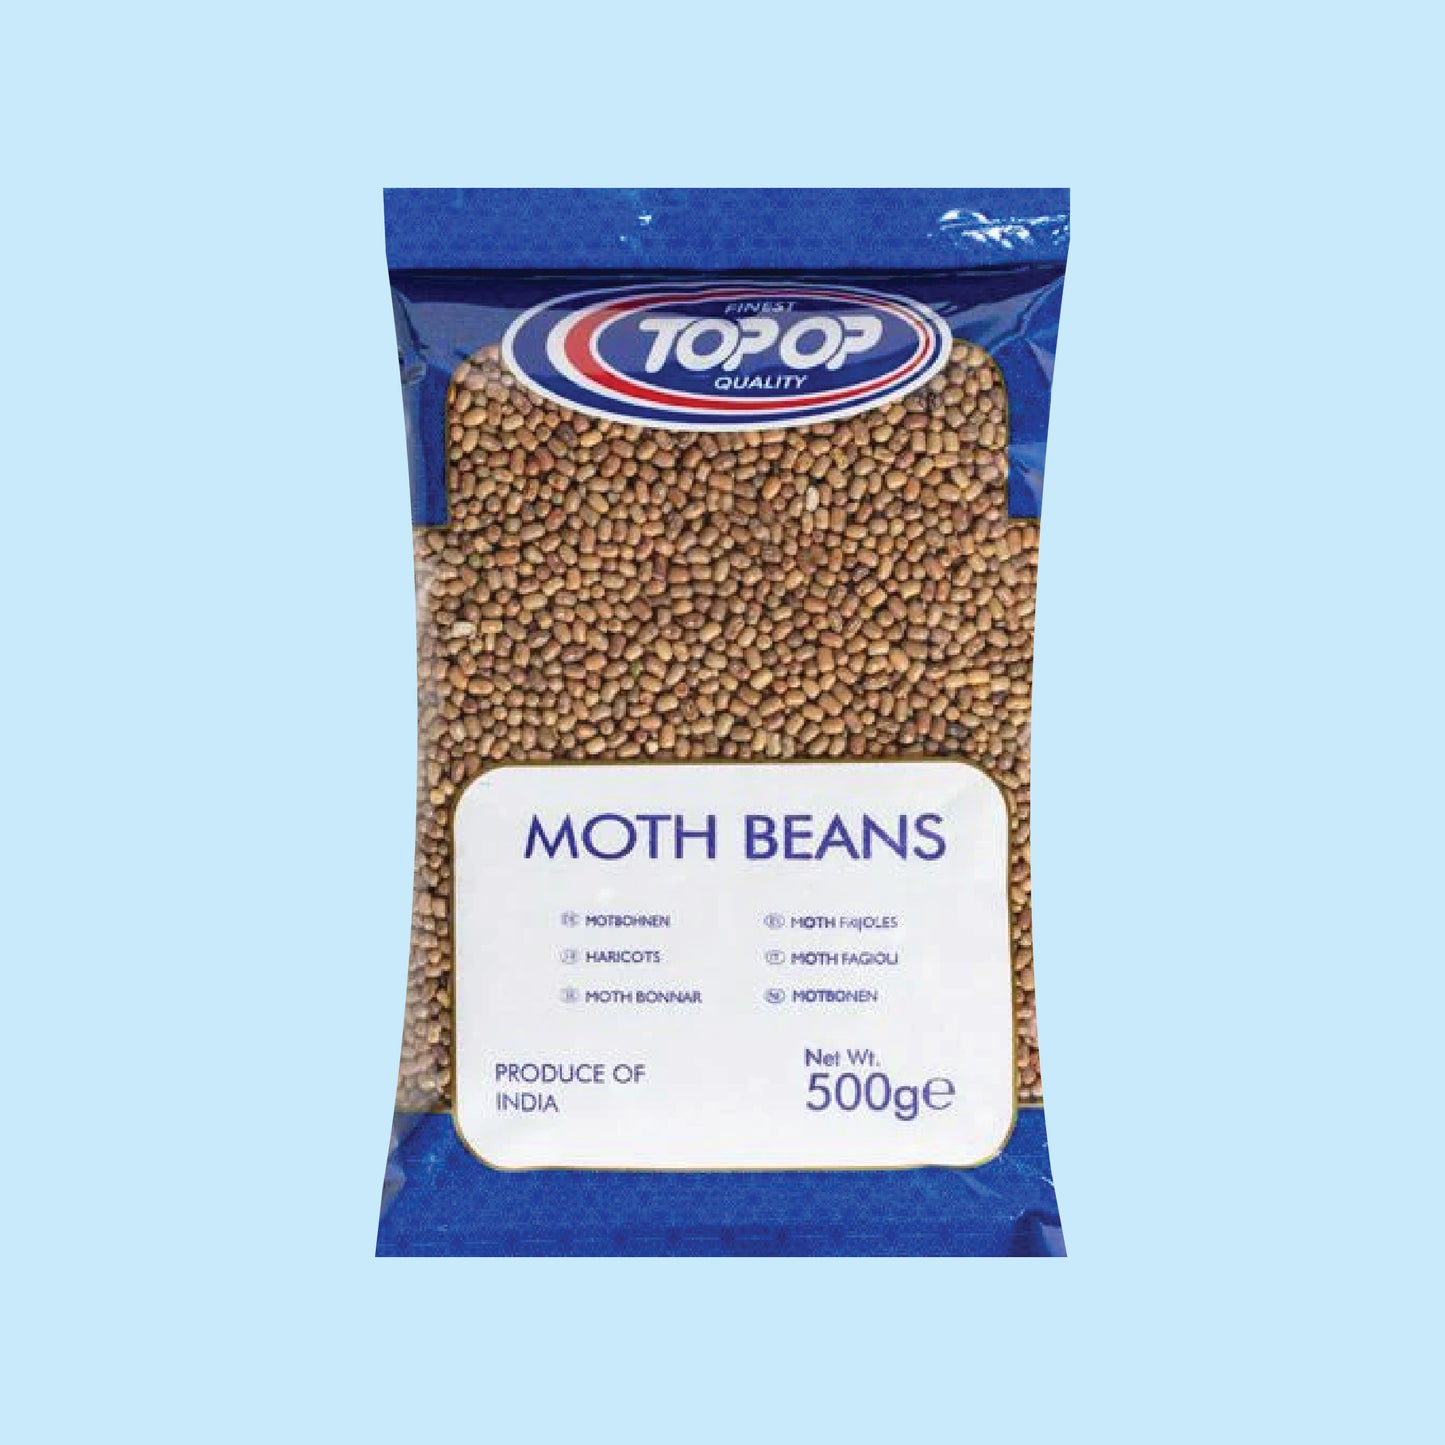 Top-Op Moth Beans